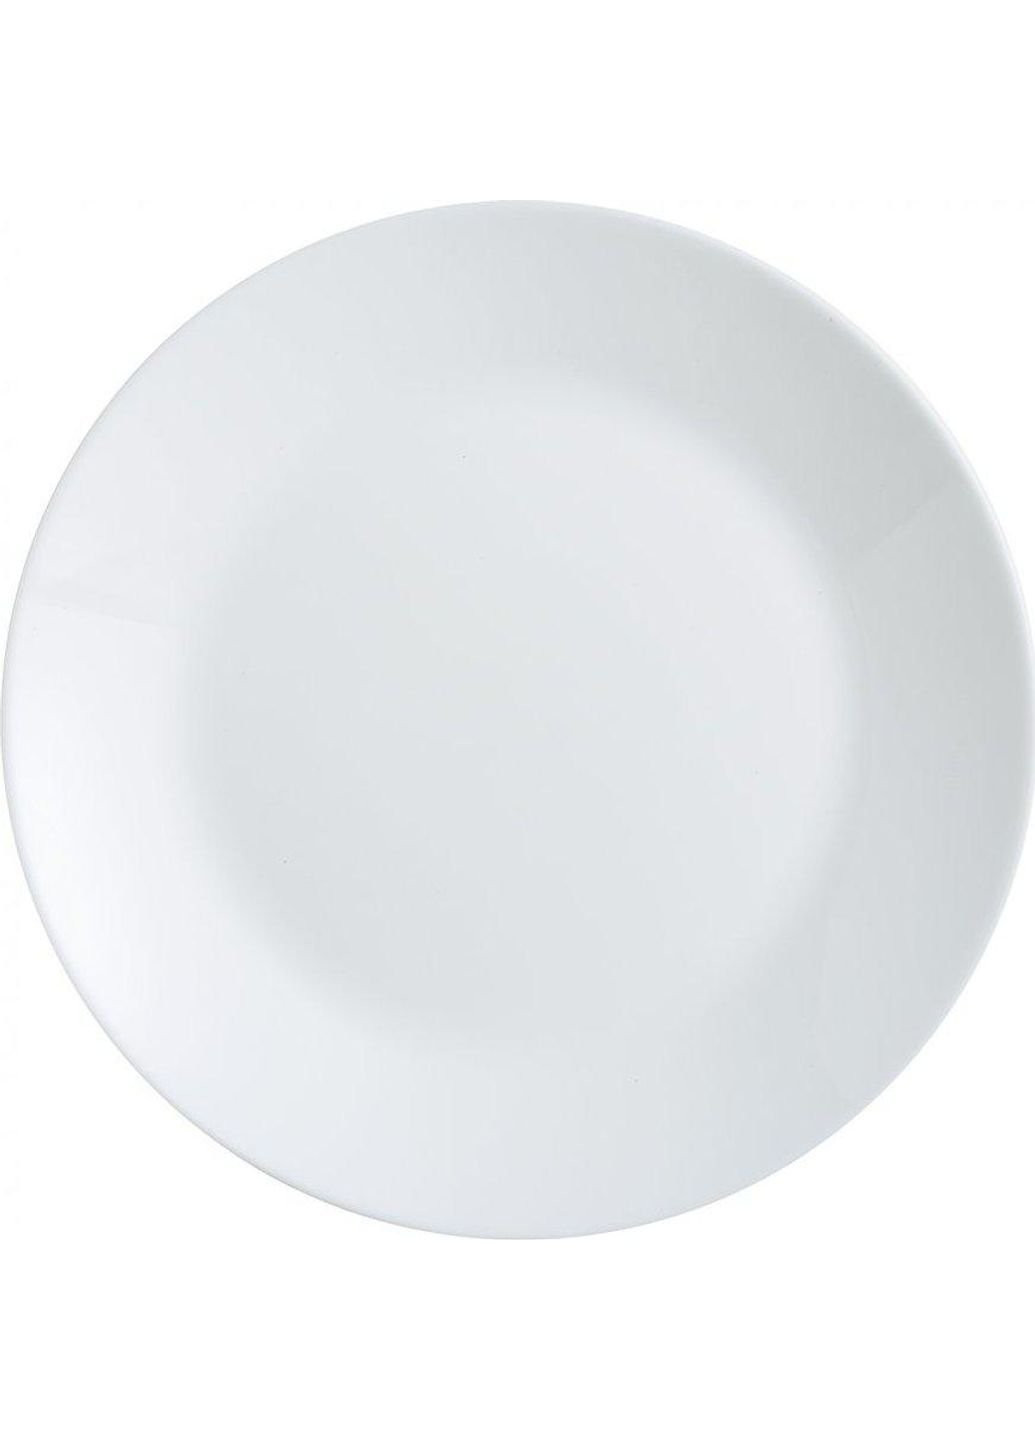 Десертная тарелка Zelie L4120 18 см Arcopal (253614483)